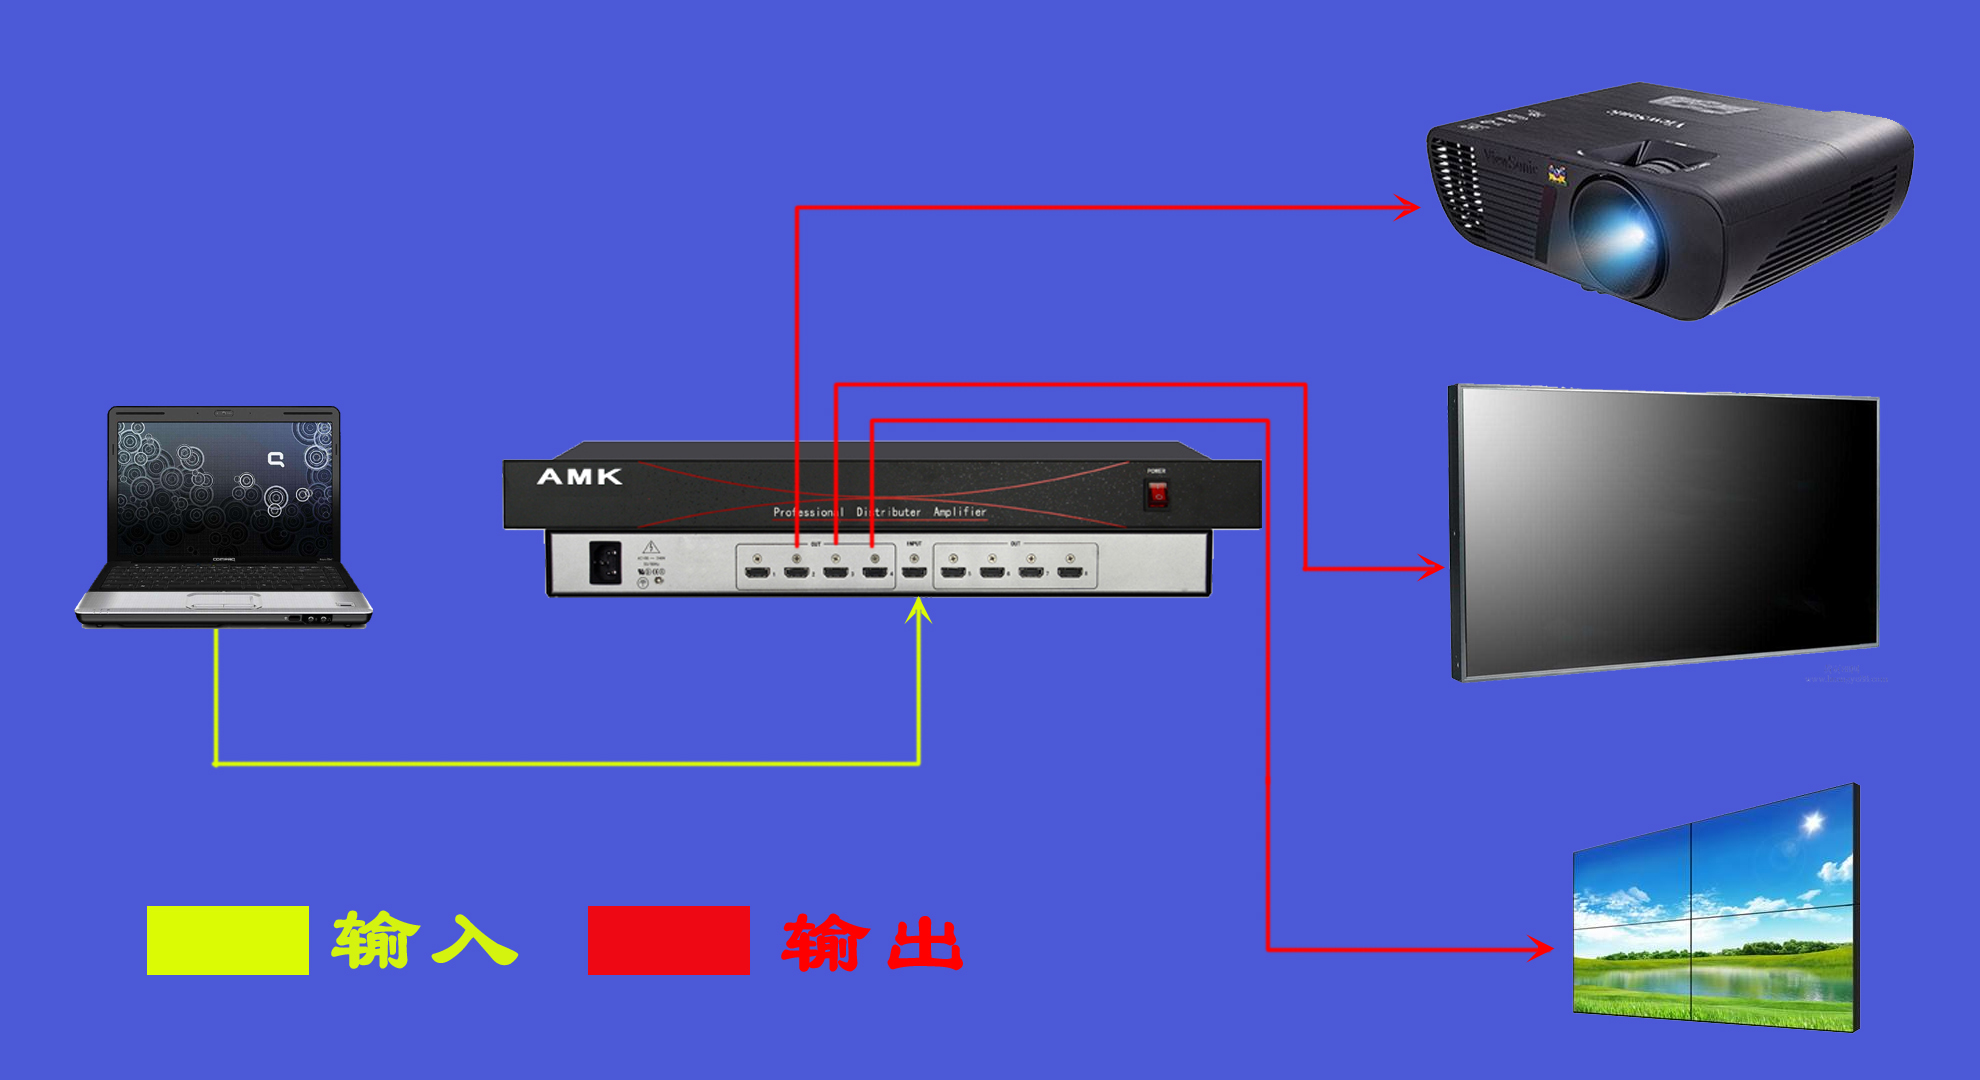 AMK HDMI分配器1进16出  北京专业切换器分配器供应商